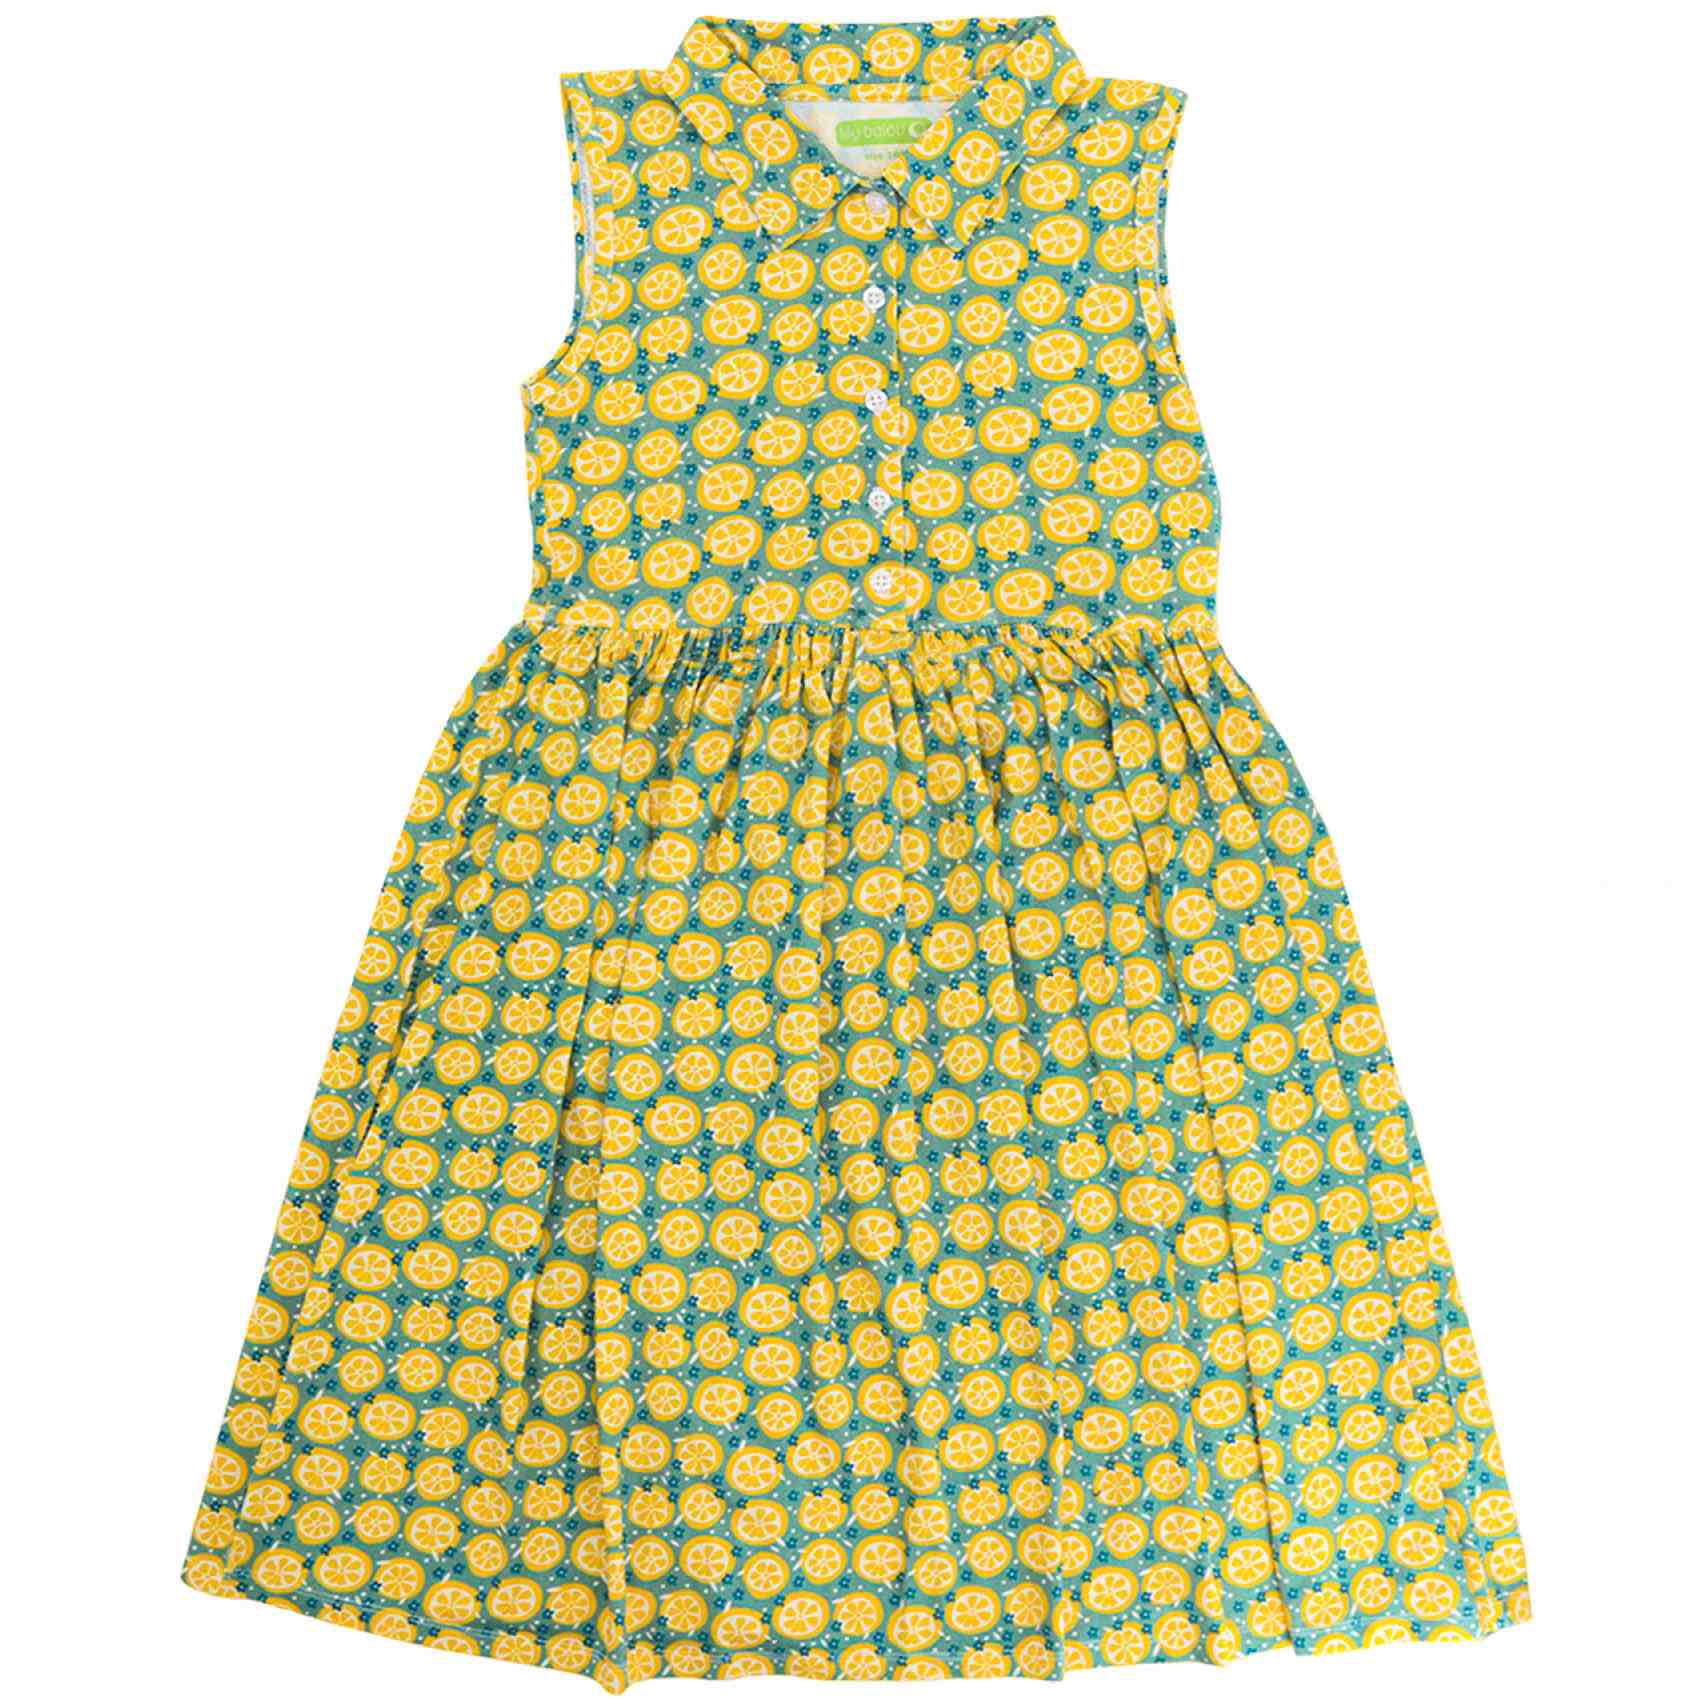 Sommer Kleid Kragen Zitronen gelb